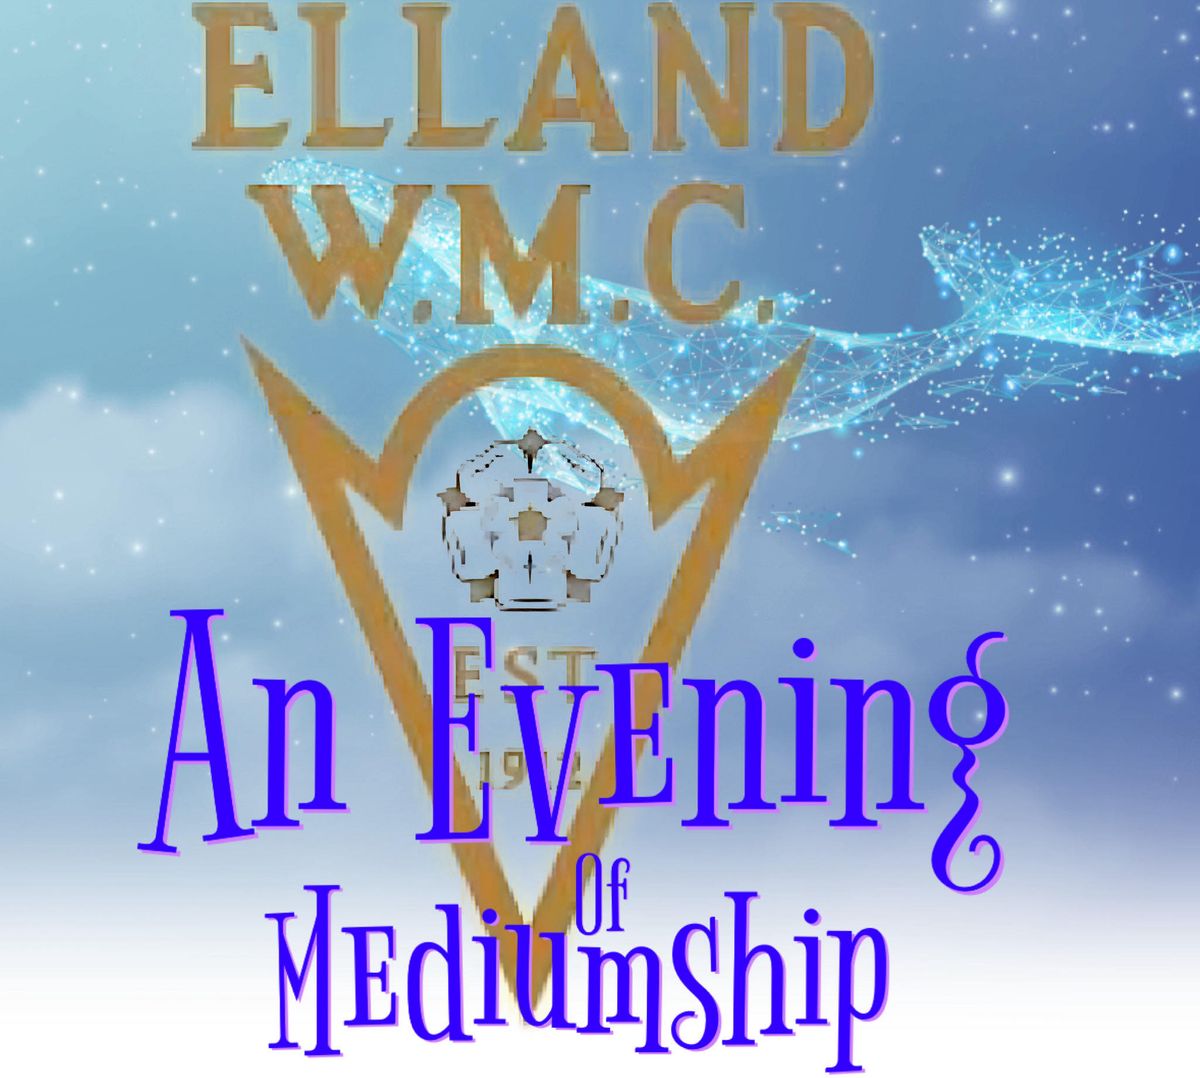 An Evening Of Mediumship at The WMC Elland with Psychic Nights UK